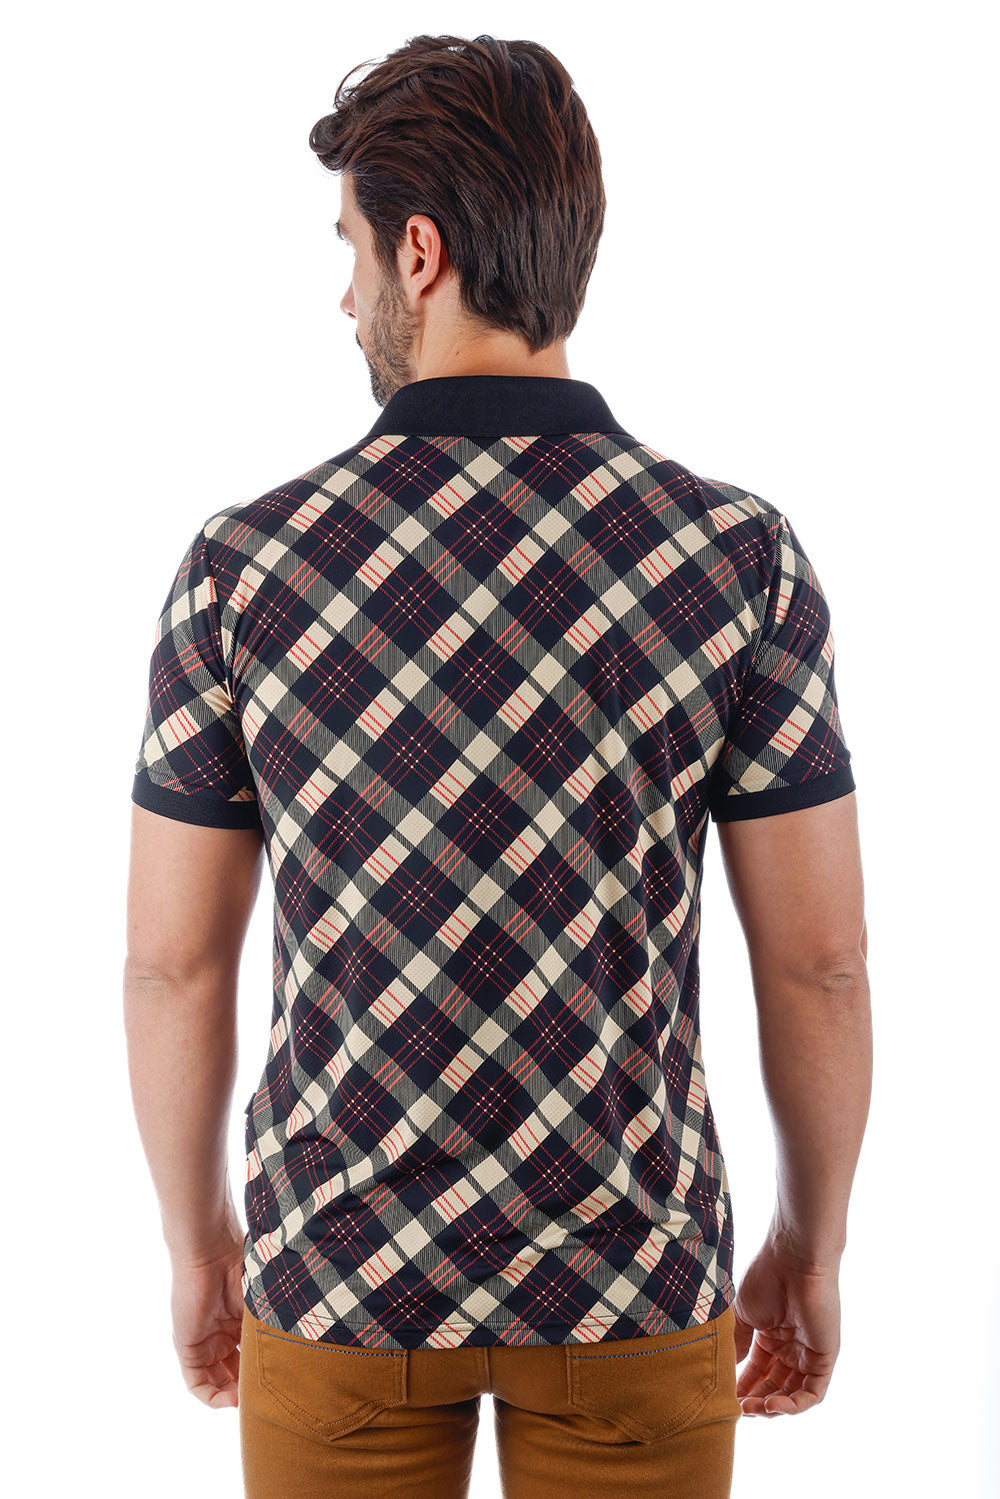 BARABAS Men Plaid Checkered Short Sleeve Polo shirts 3PM01